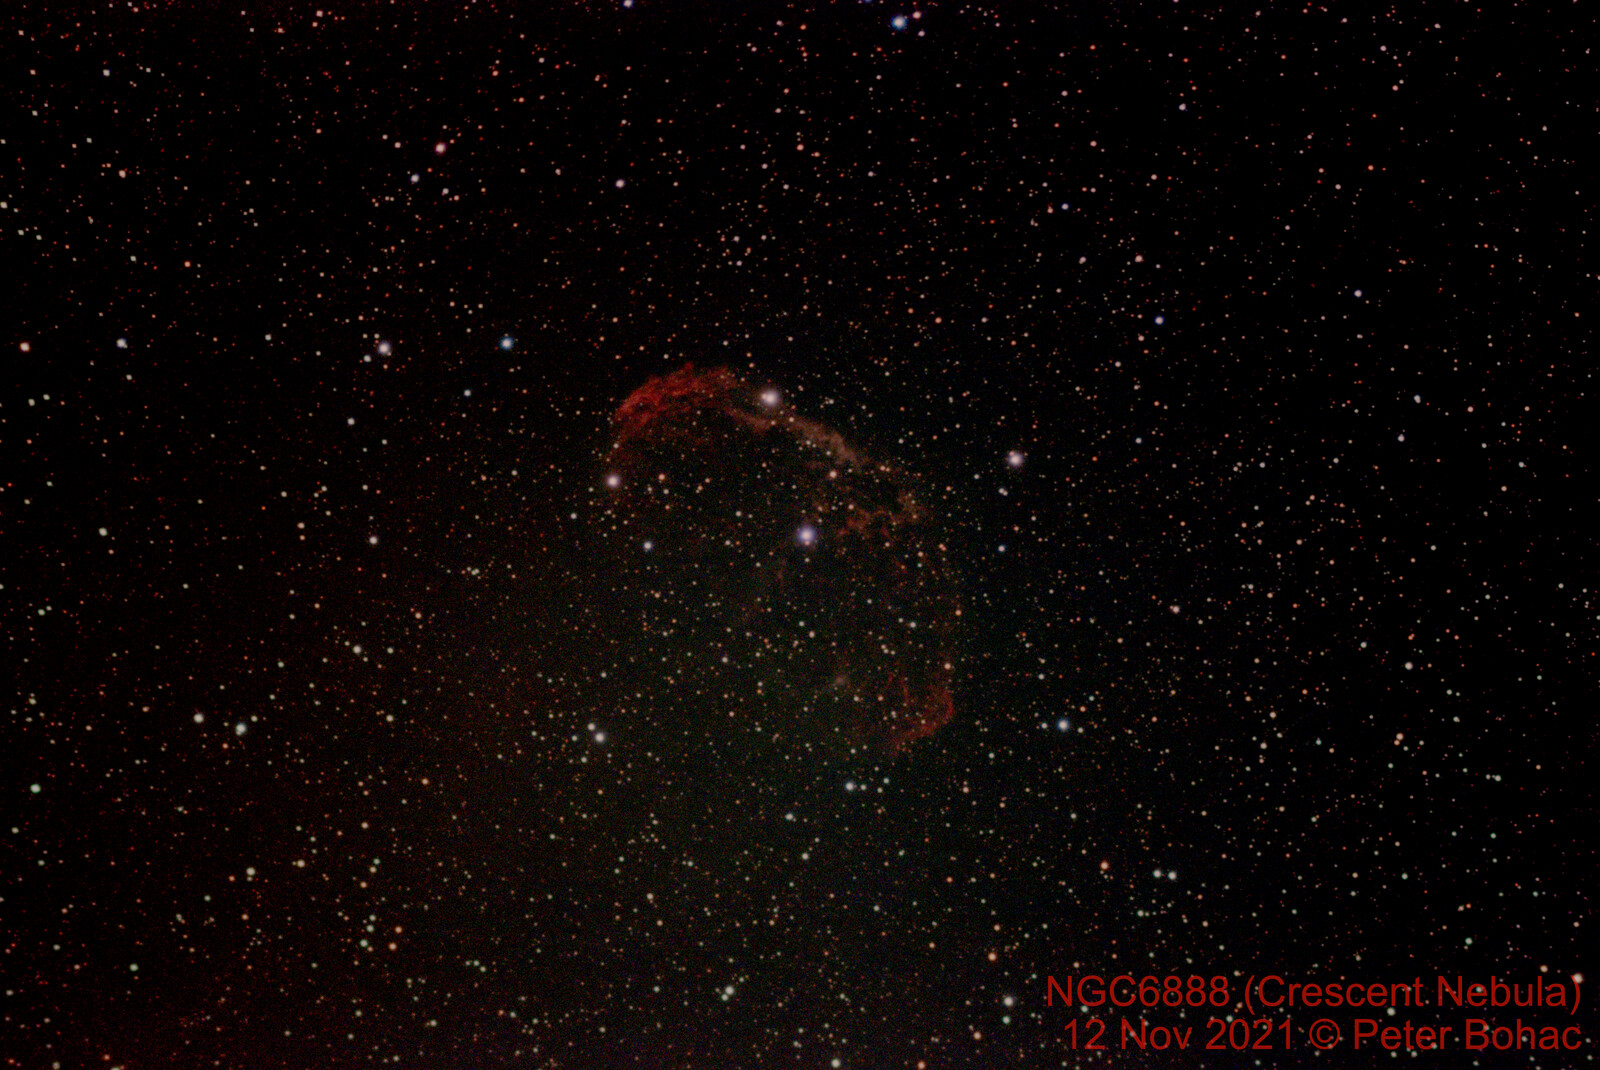 Crescent Nebula (NGC6888)